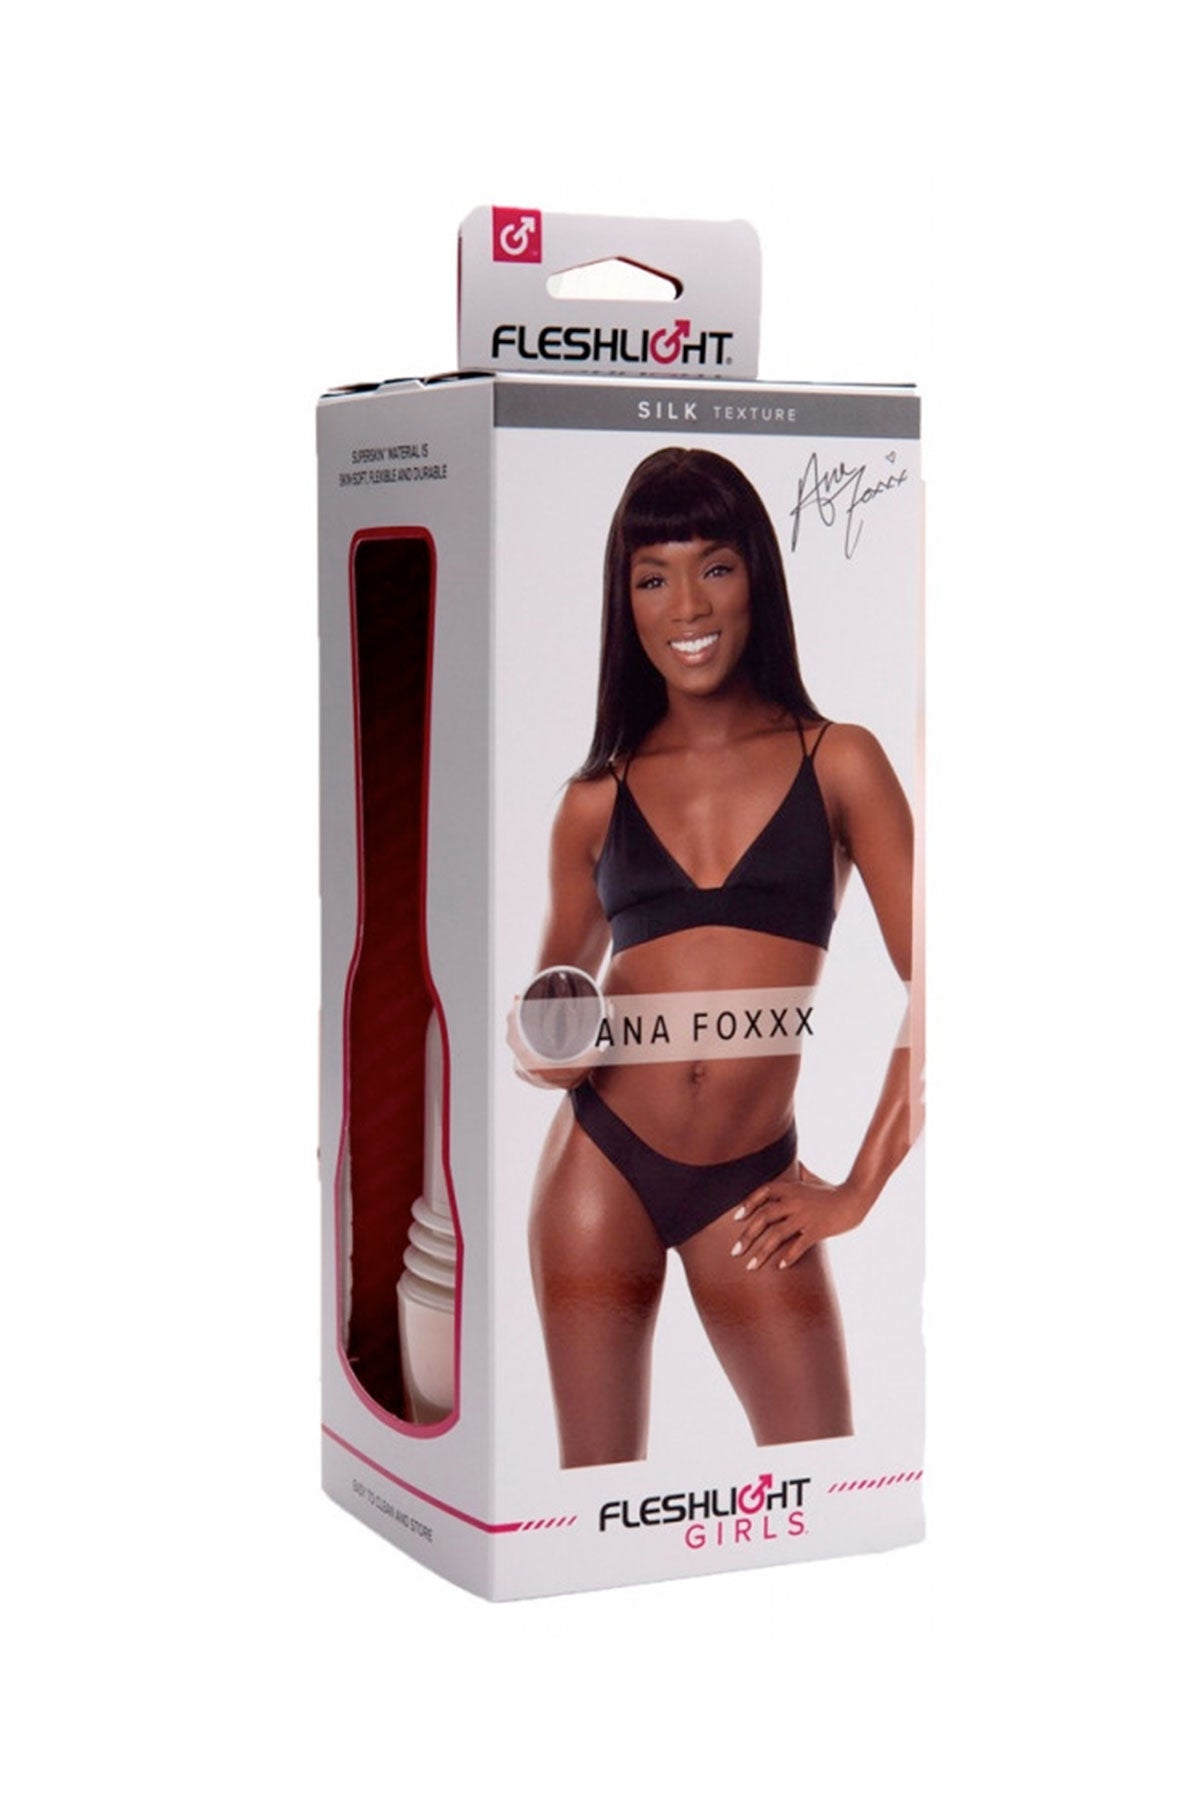 Ana Foxxx | Fleshlight Girls Box 